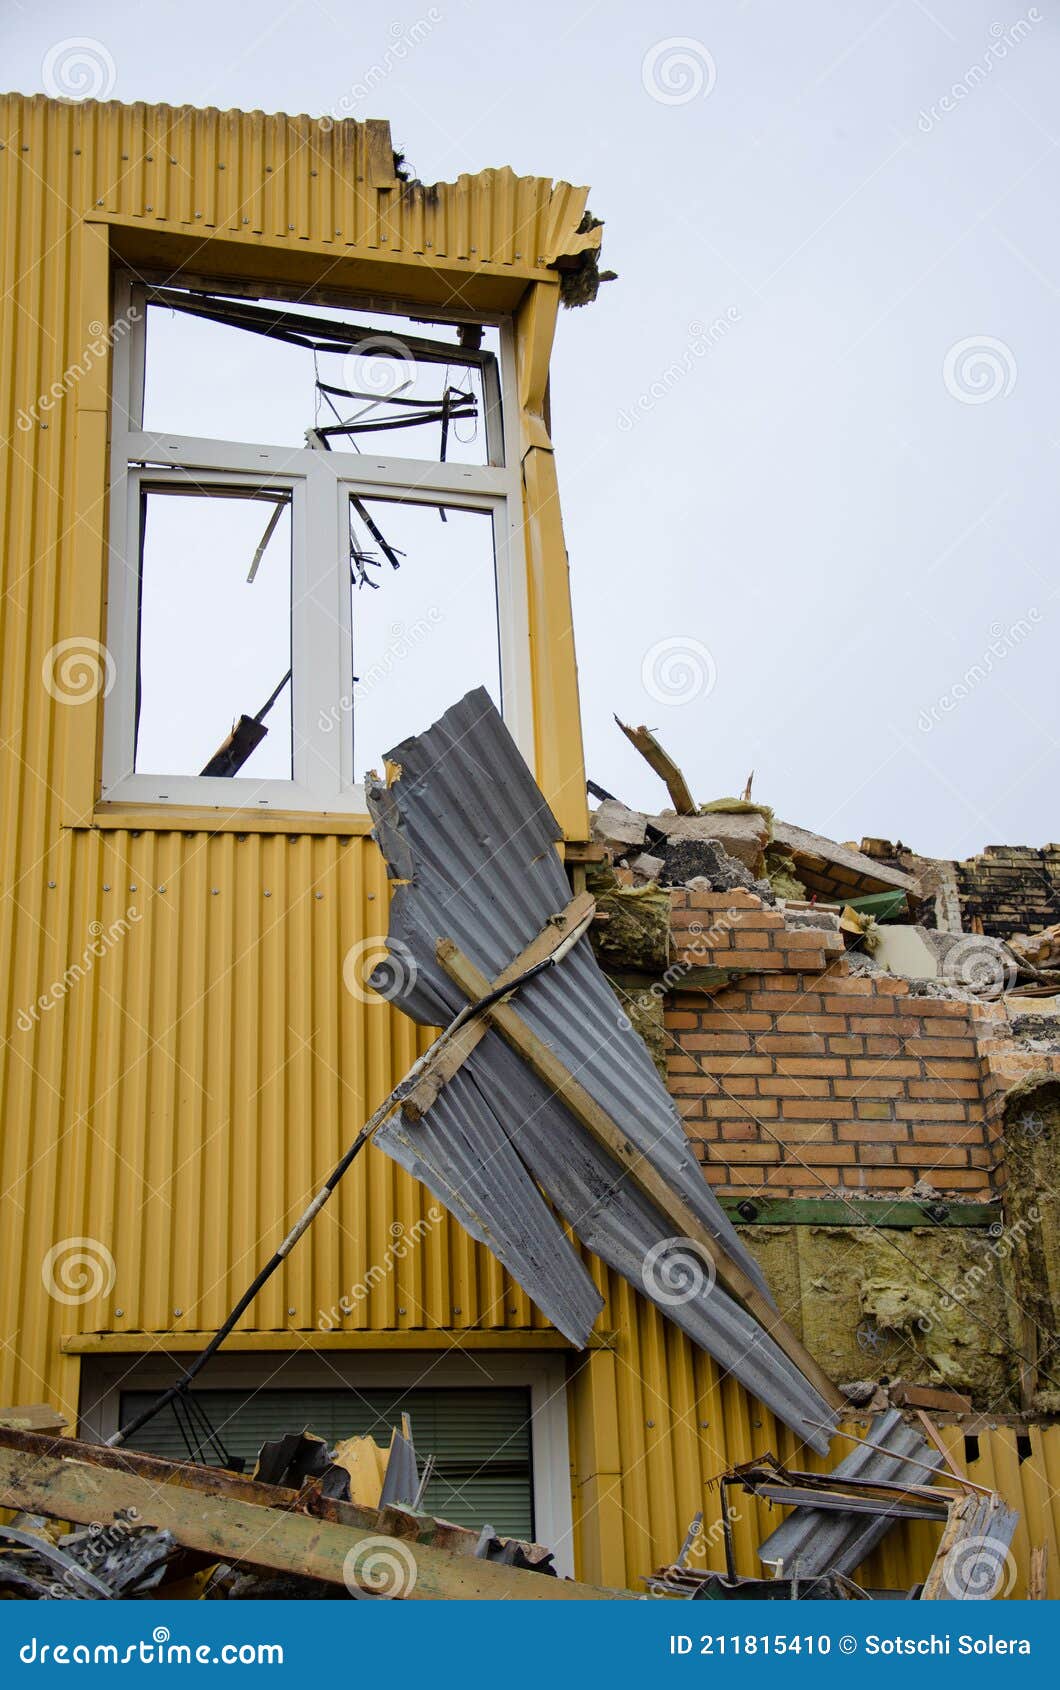 flensburg fahrensodde burning fire airplane hanger. yellow destroyed facade with broken window